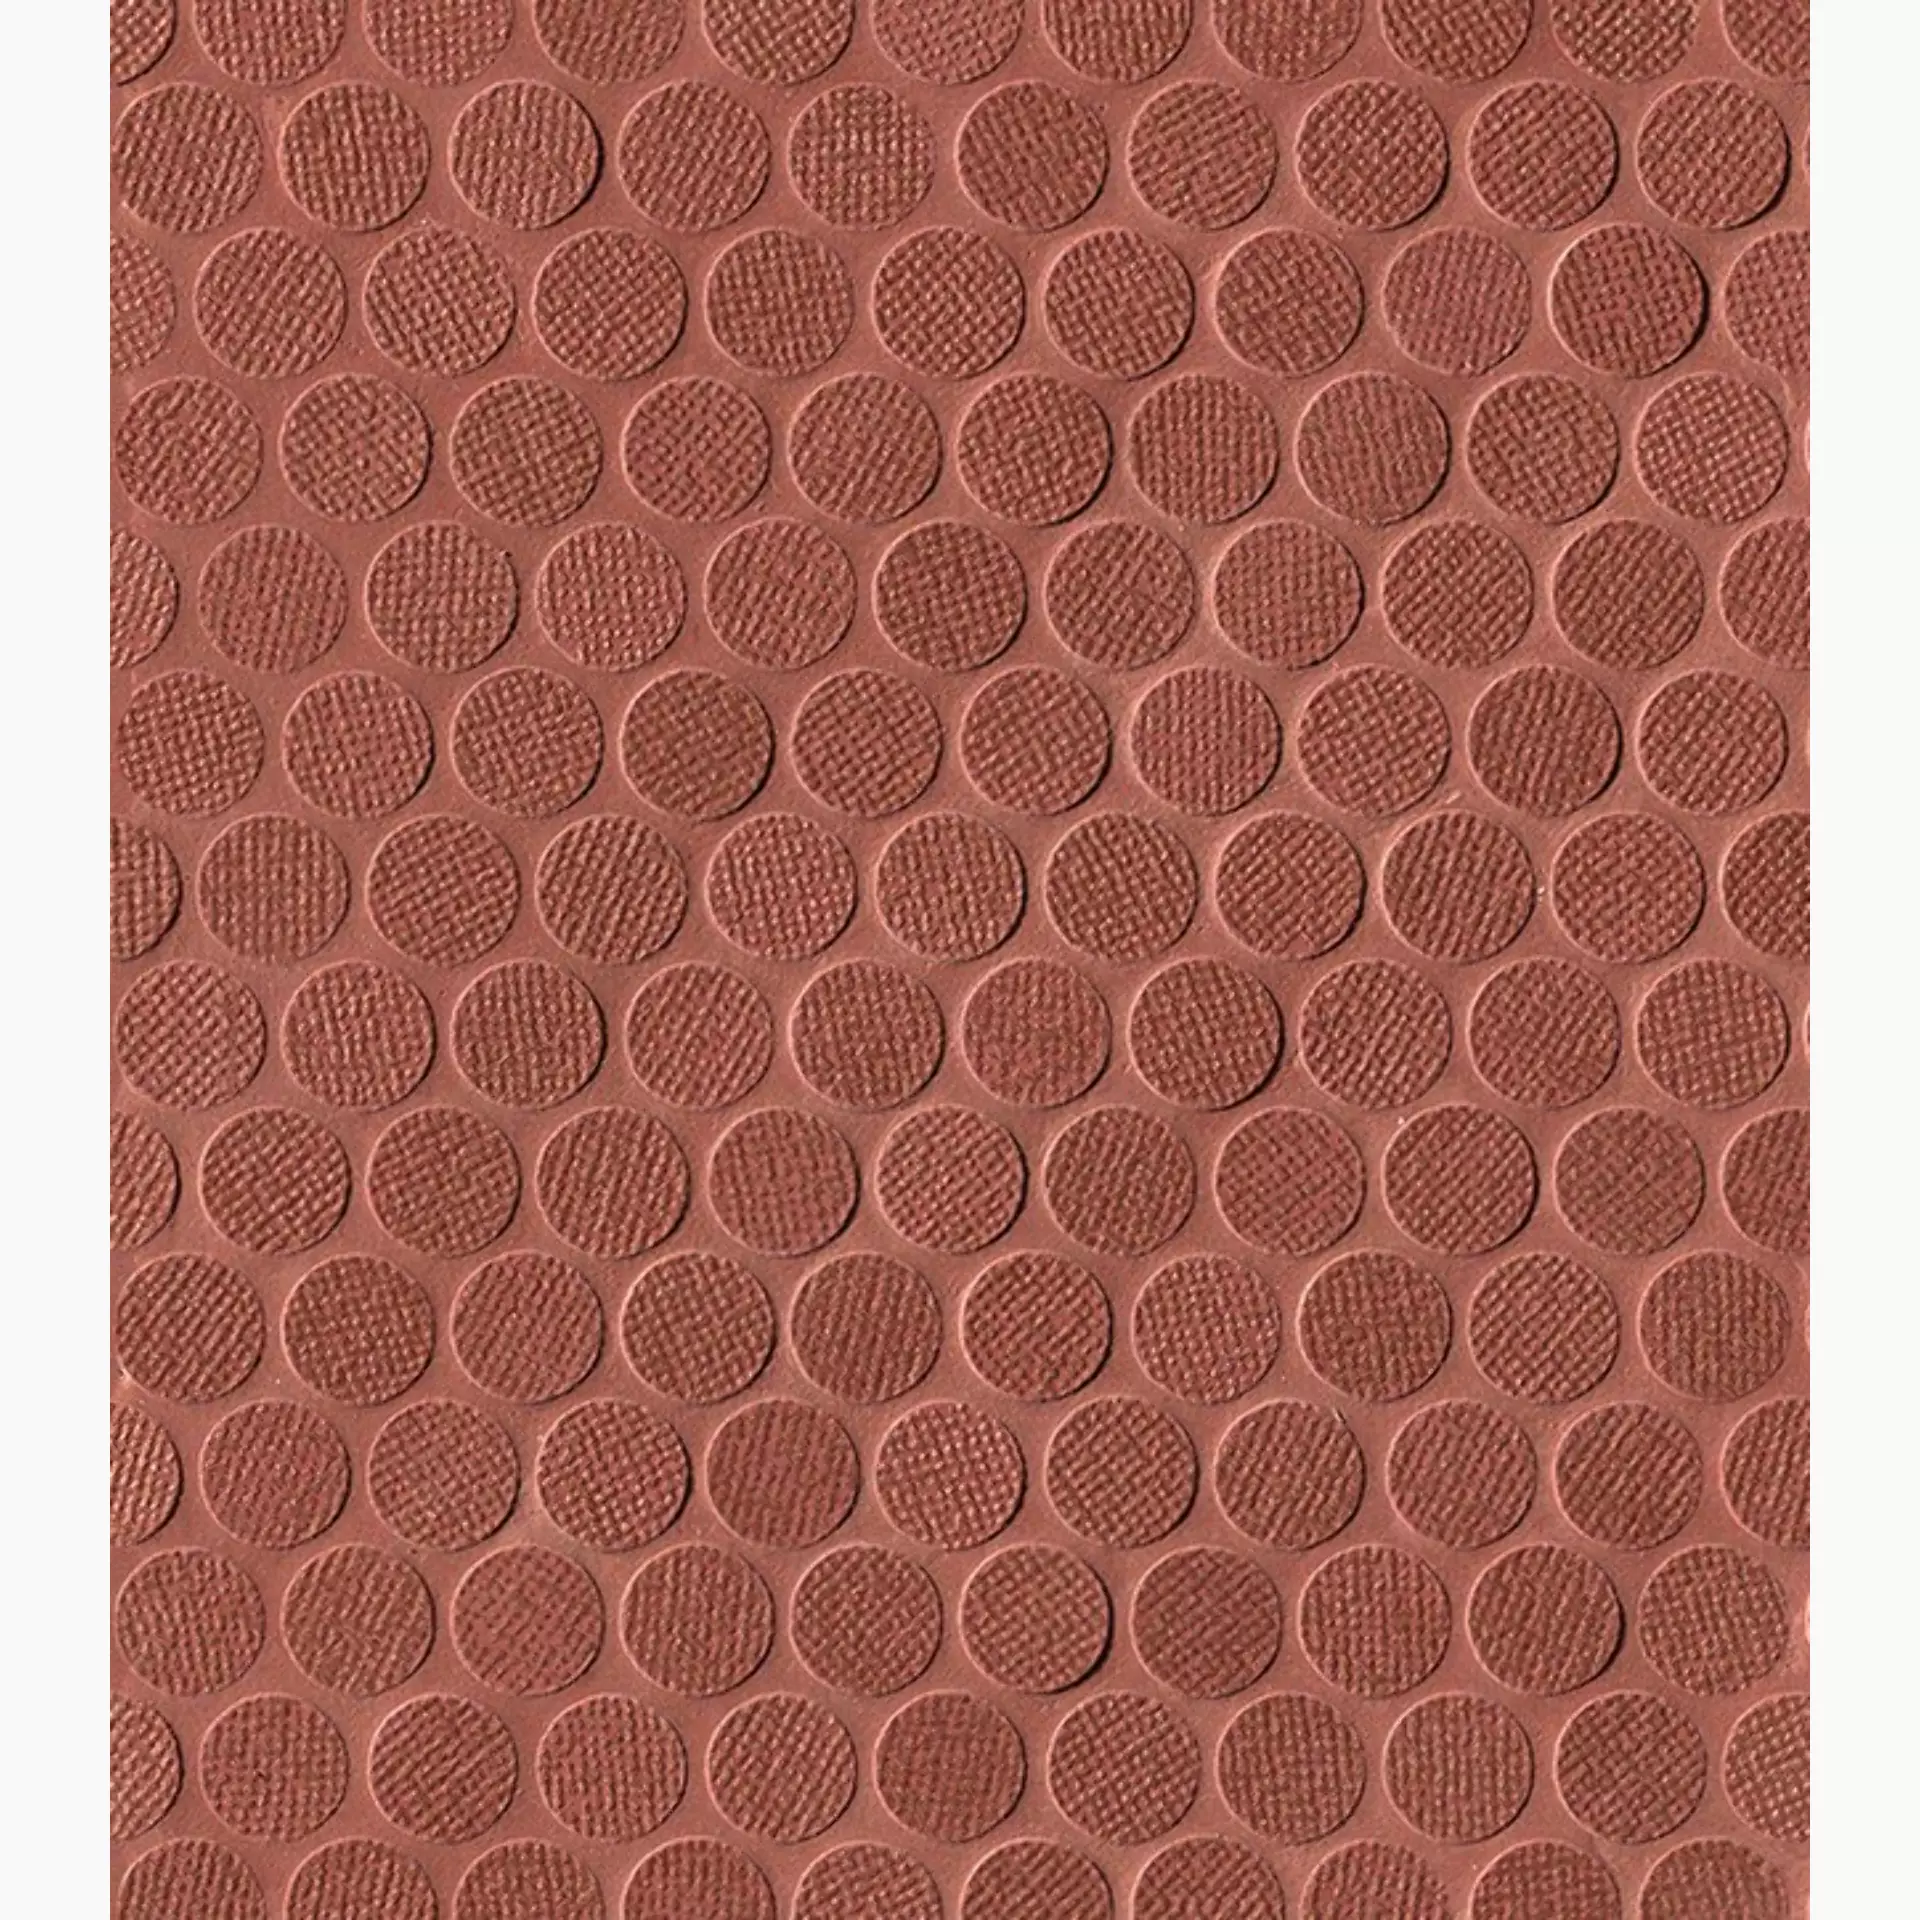 FAP Color Line Marsala – Copper Matt Mosaic Round fNML 29,5x35cm